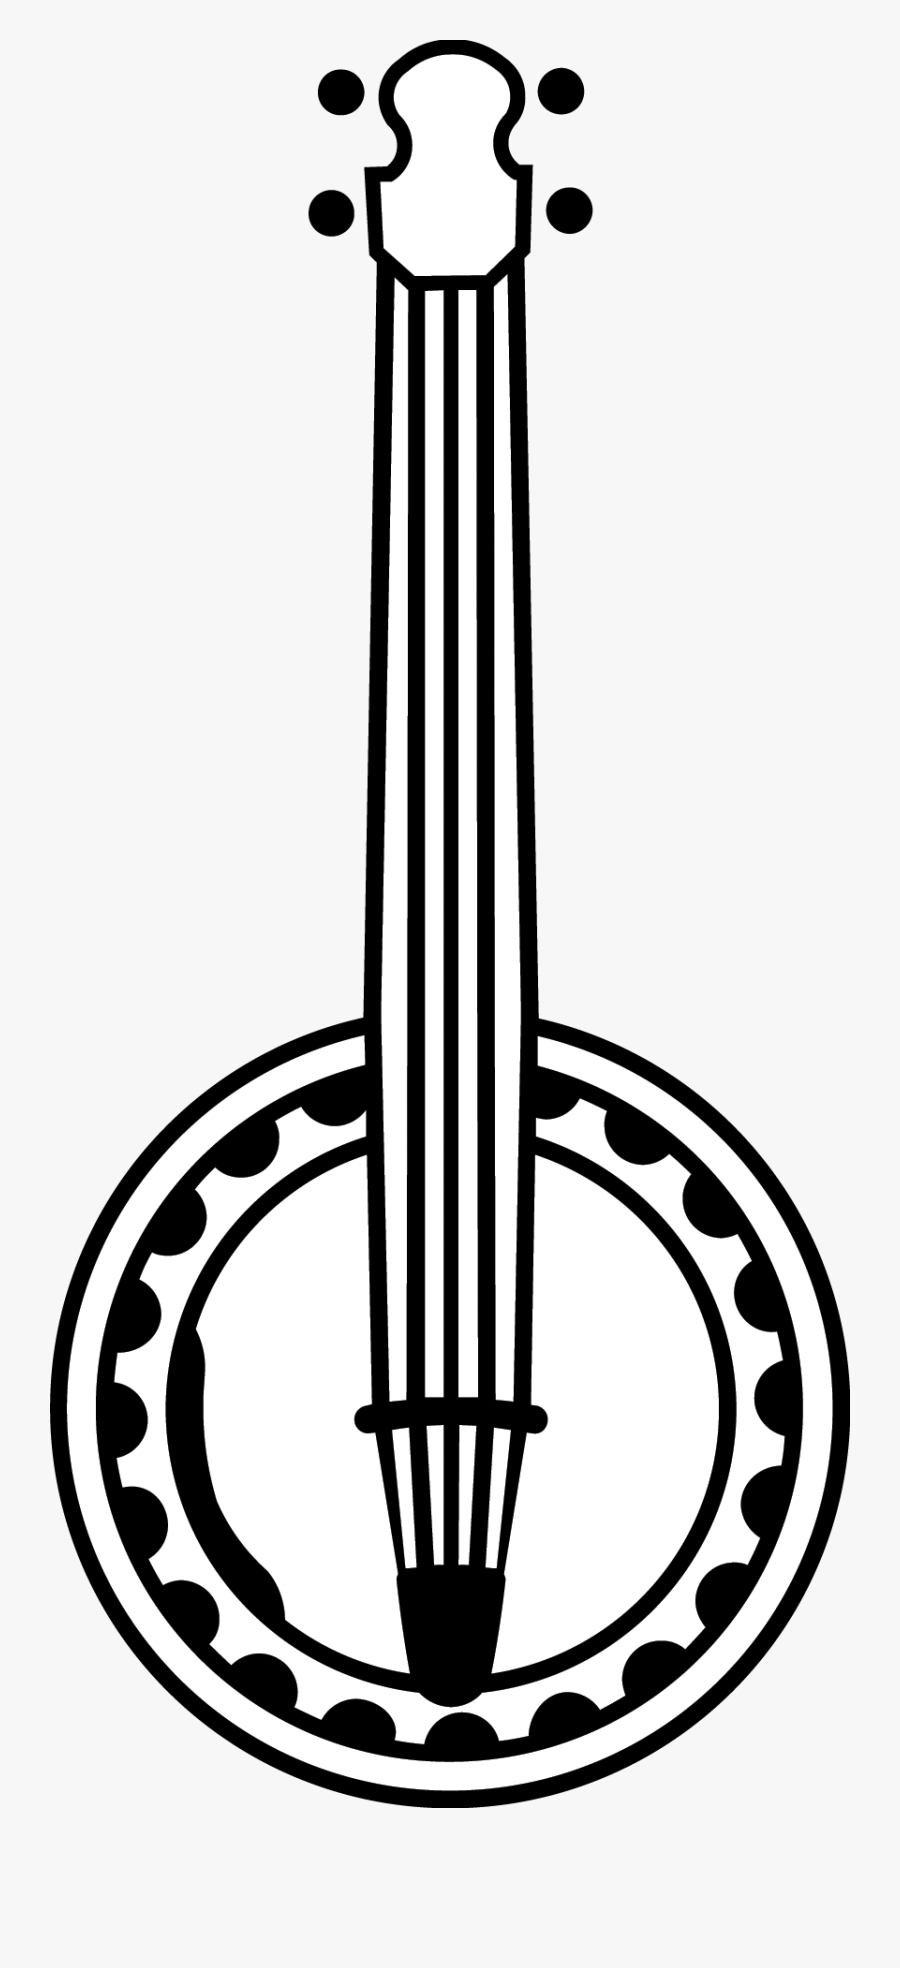 Banjo - Banjo Clipart Black And White, Transparent Clipart